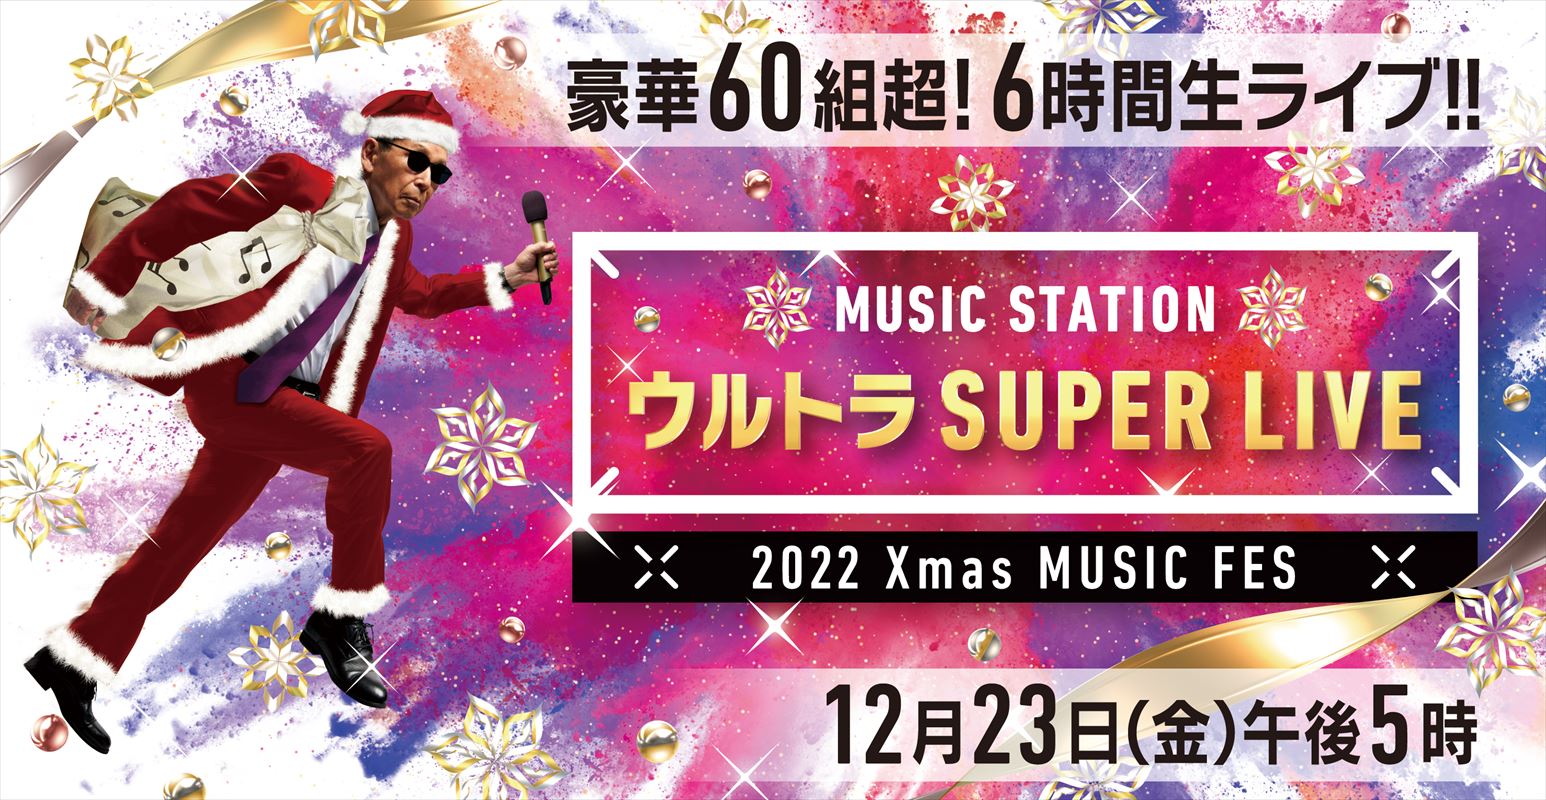 『Mステ ウルトラSUPER LIVE 2022』出演アーティスト第2弾にKinKi Kids、Travis Japan、King Gnu